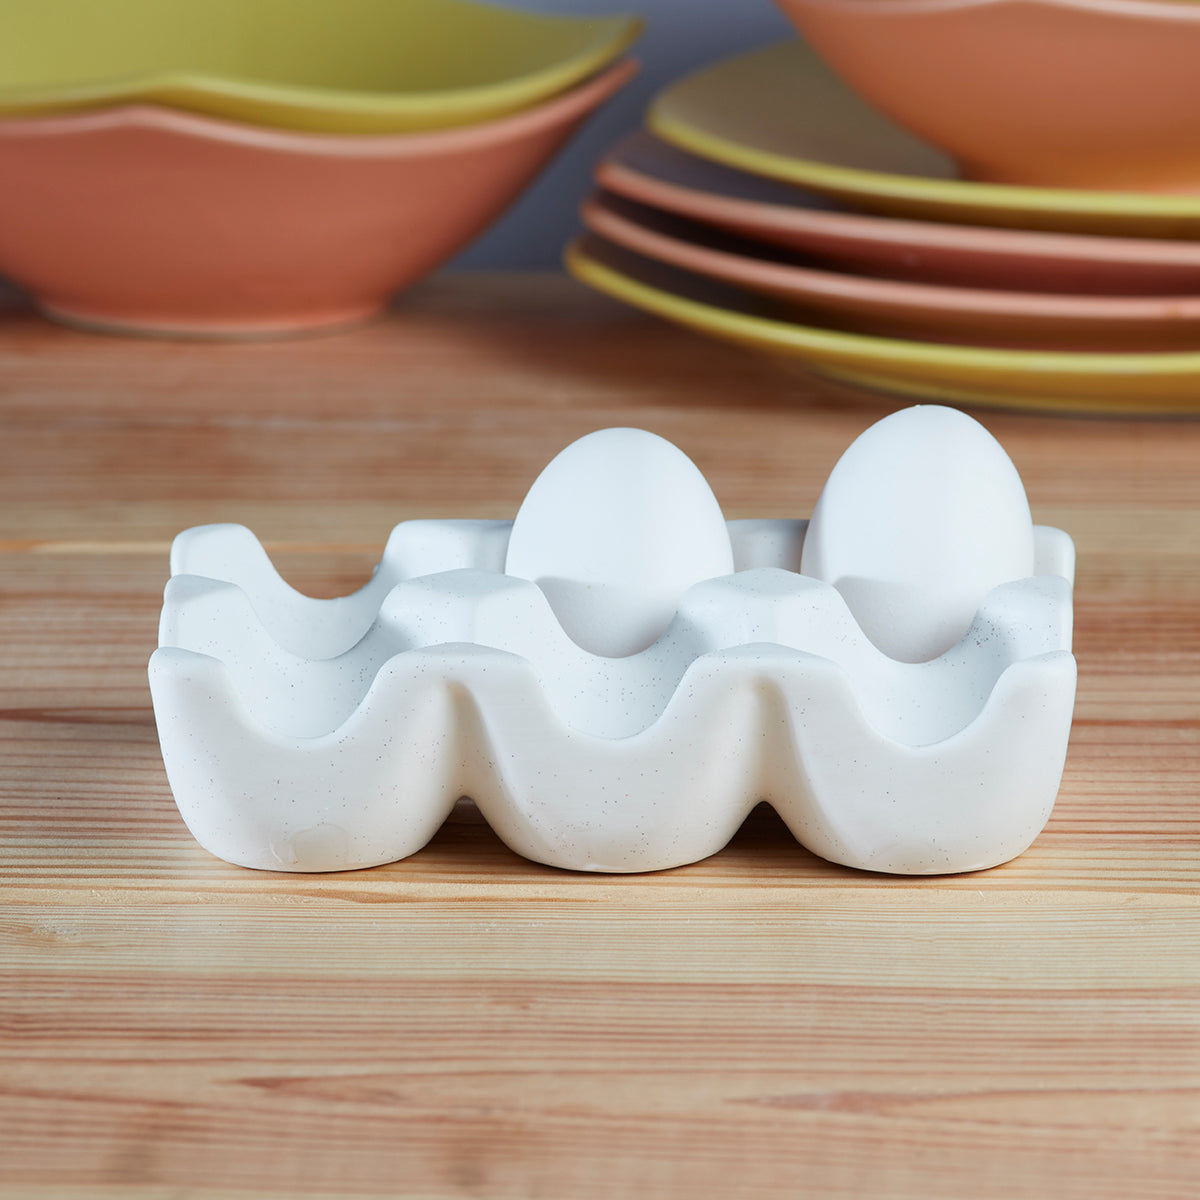 Ceramic 6 Egg Tray / Crate for countertop Refrigerator, White